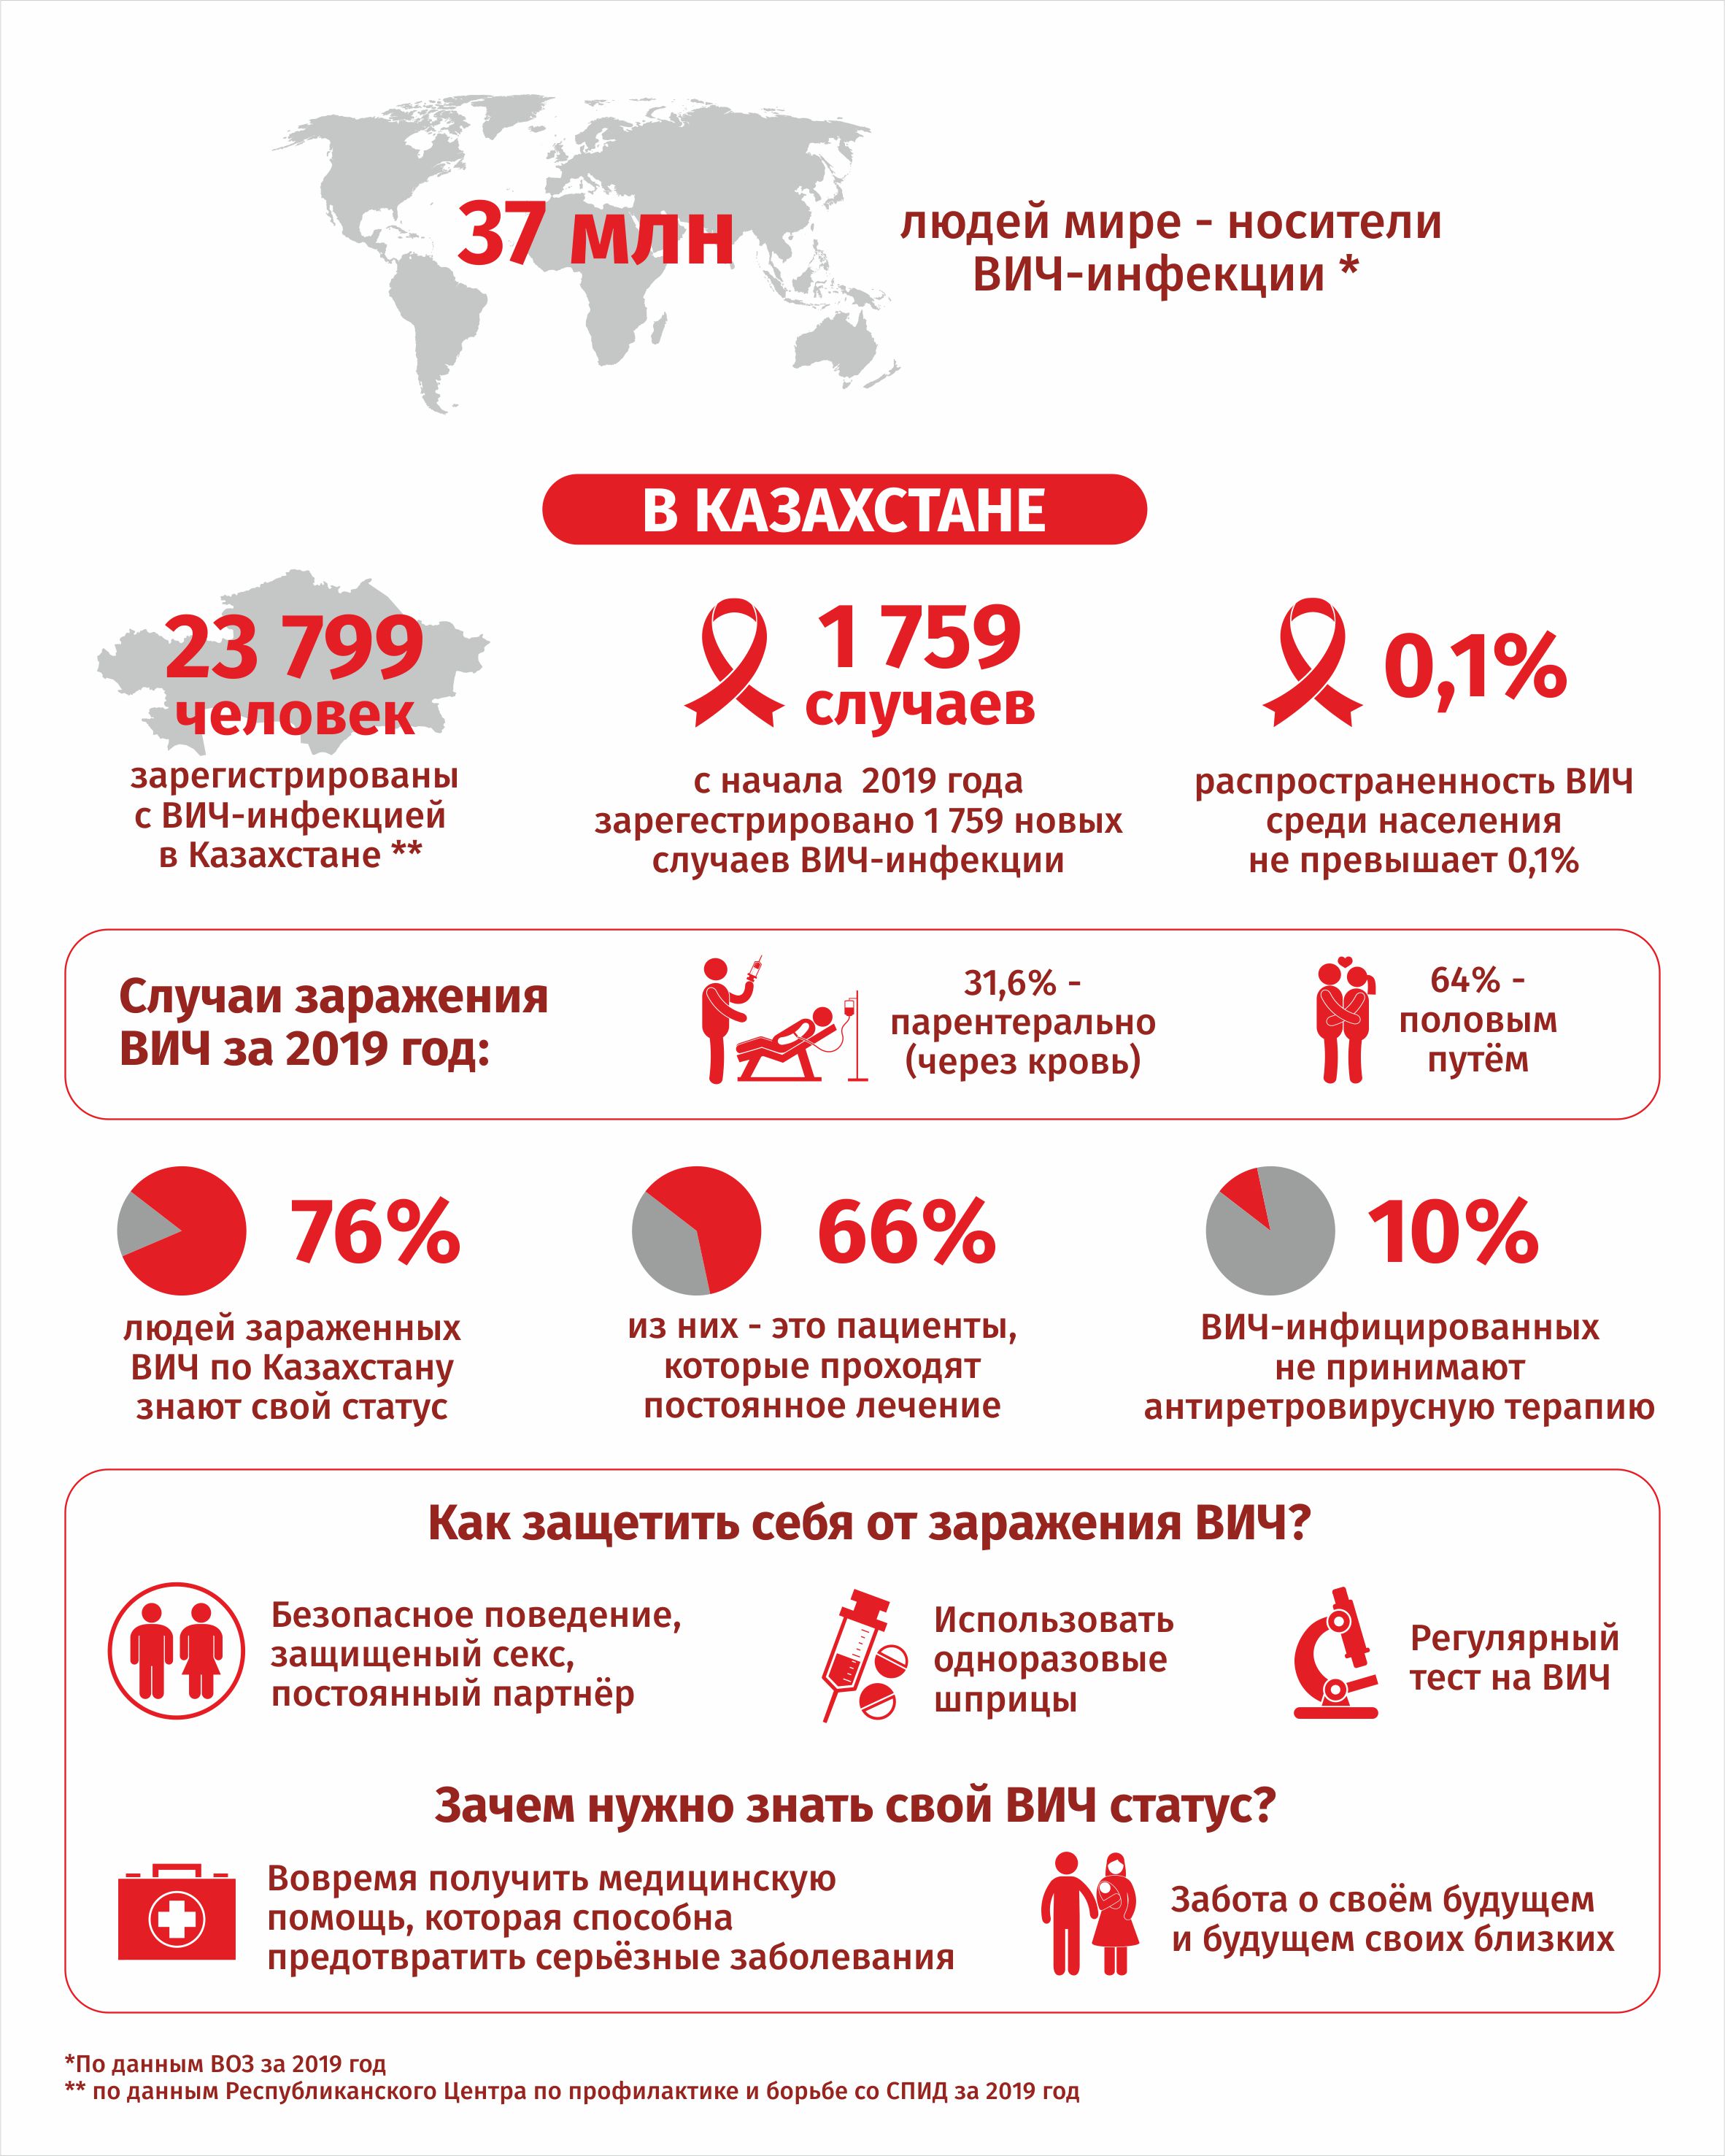 Сколько живет человек со спидом без лечения. Инфографика профилактика ВИЧ. ВИЧ инфекции статистика в Казахстане. Инфографика ВИЧ инфекция. Воз ВИЧ инфографика.